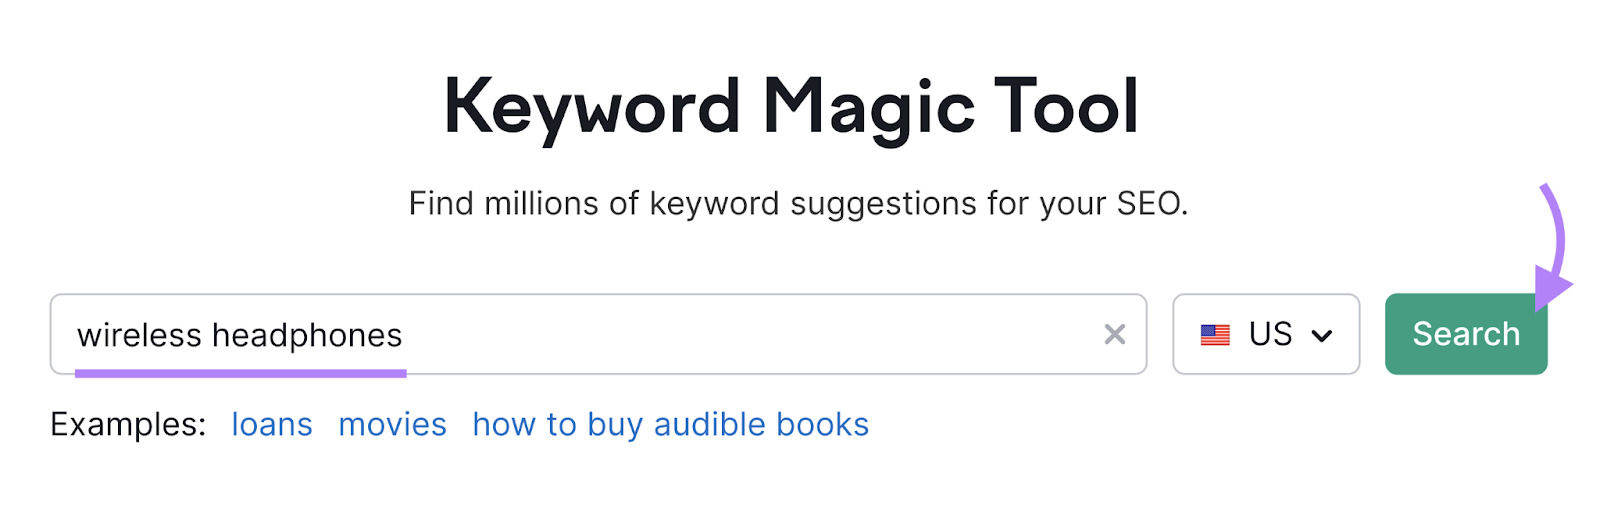 Keyword Magic Tool search for "wireless headphones"